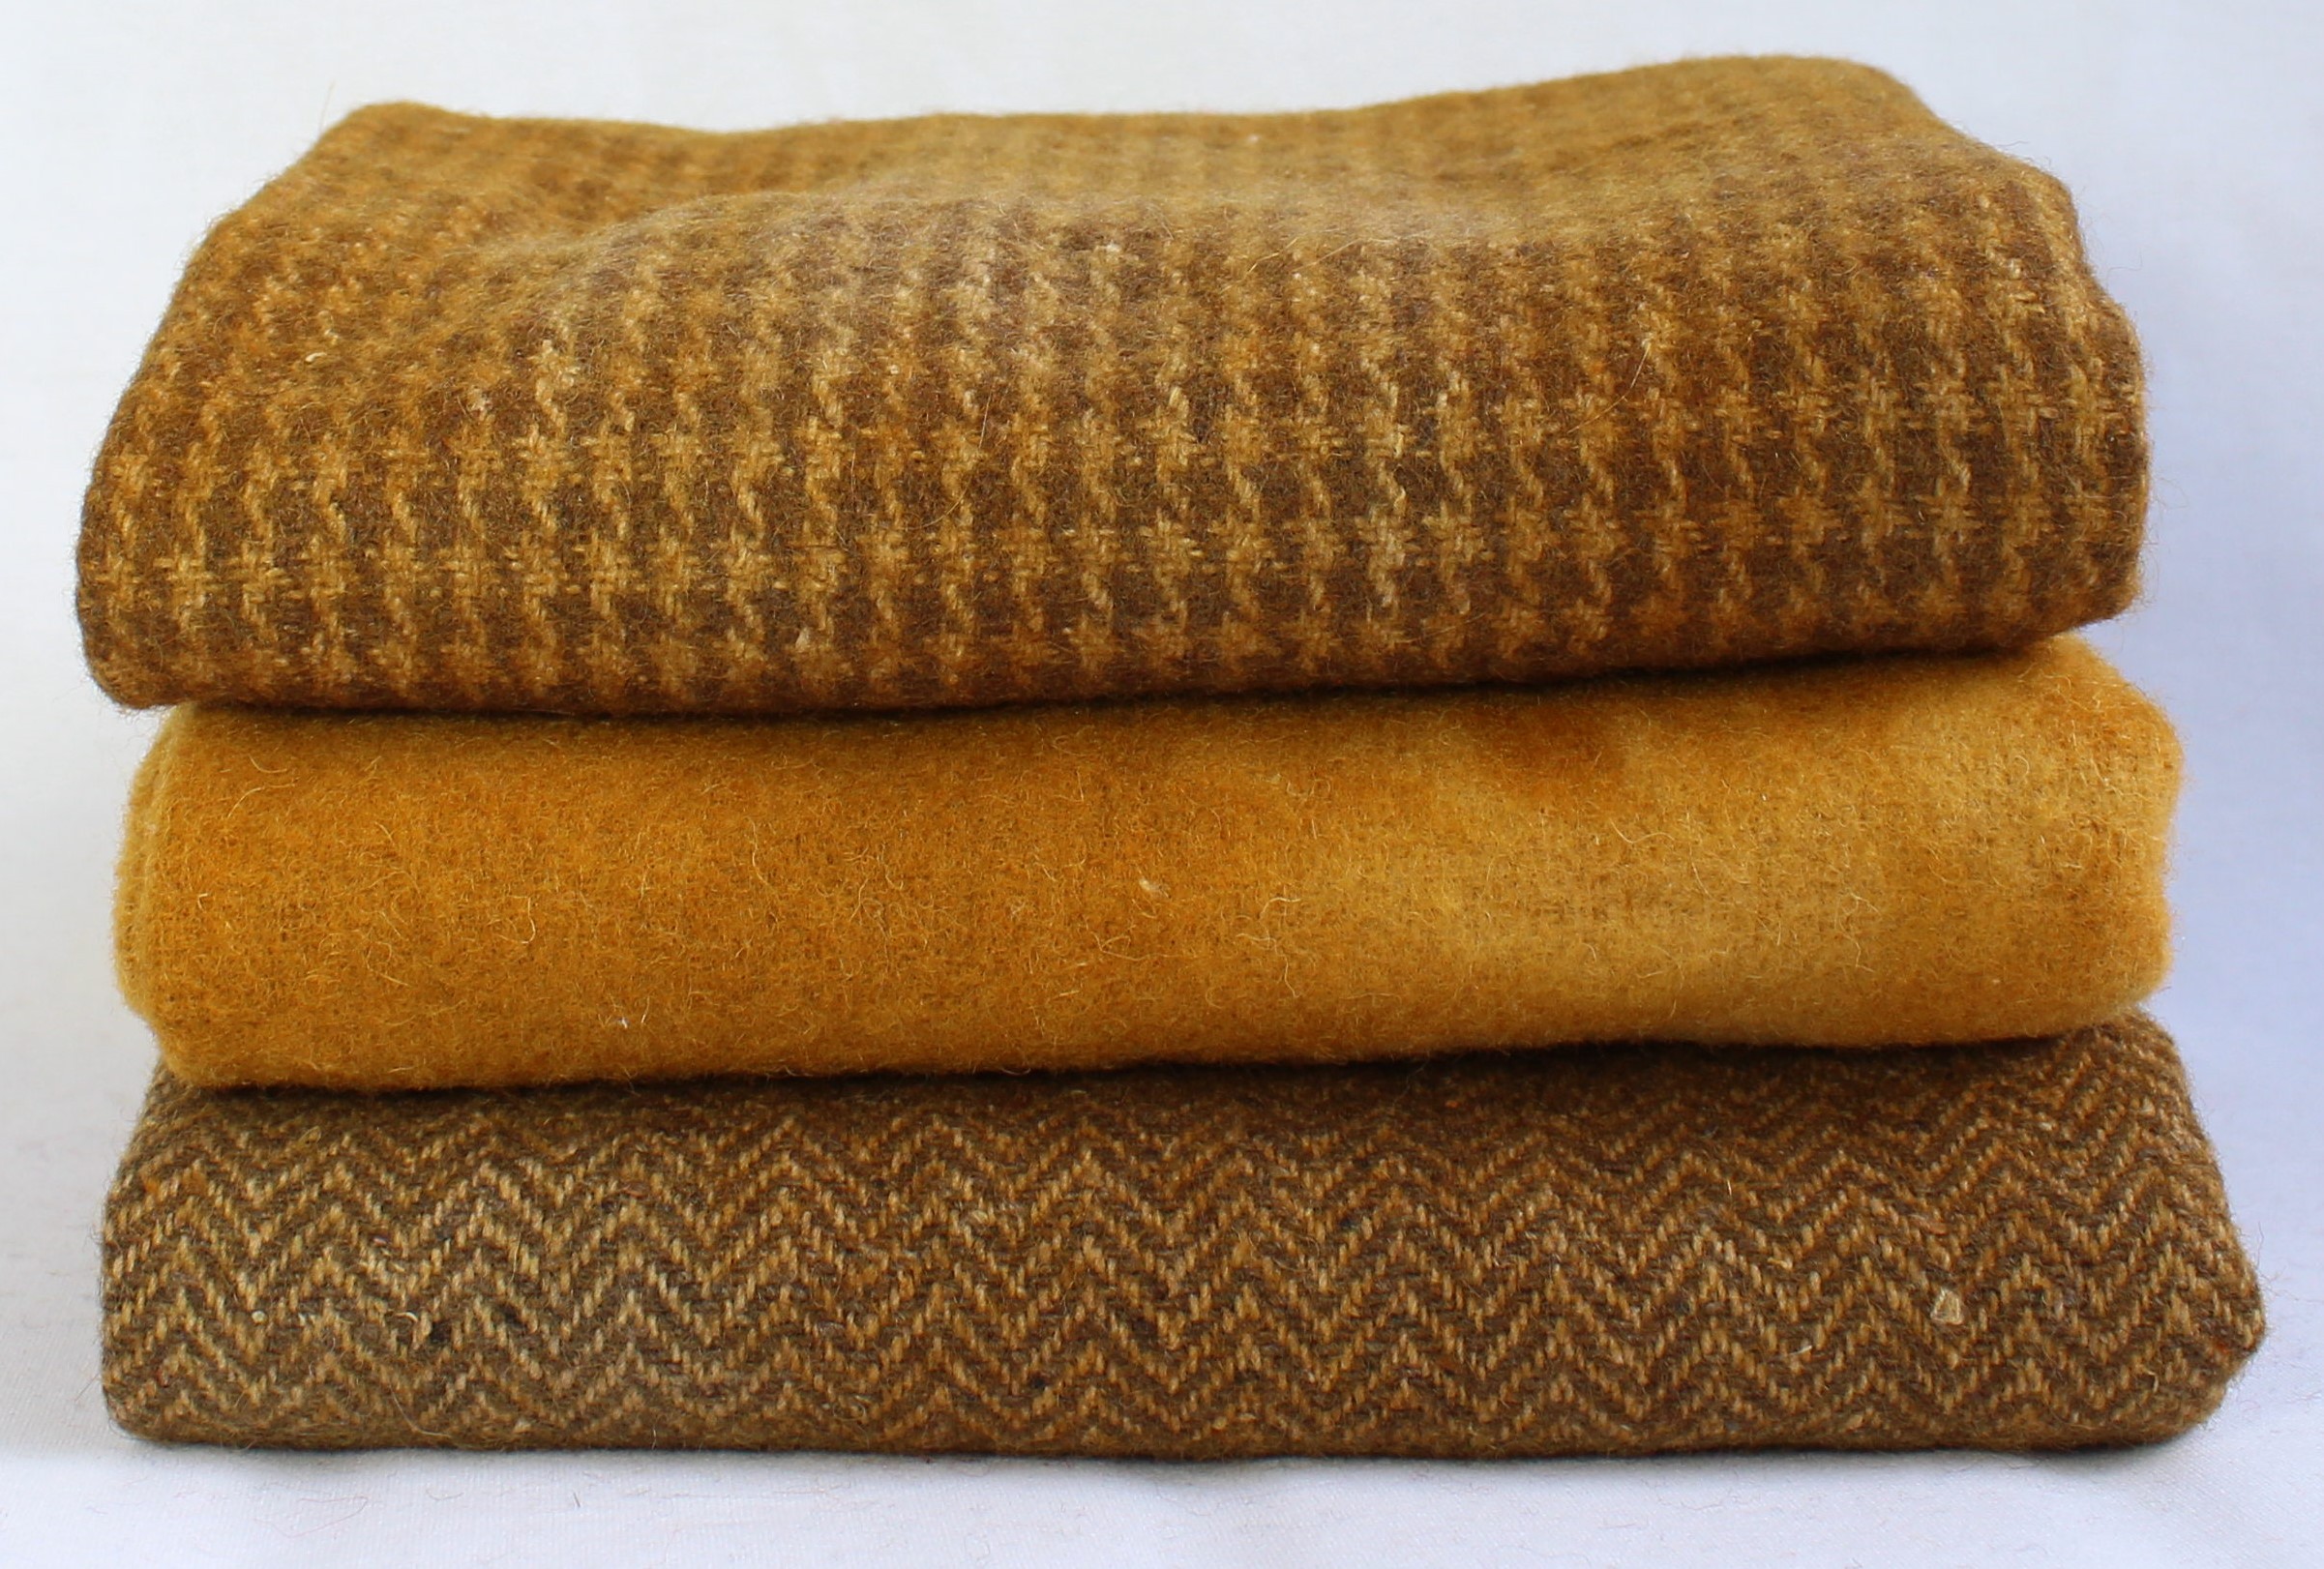 BRONZE - Wool Fabric